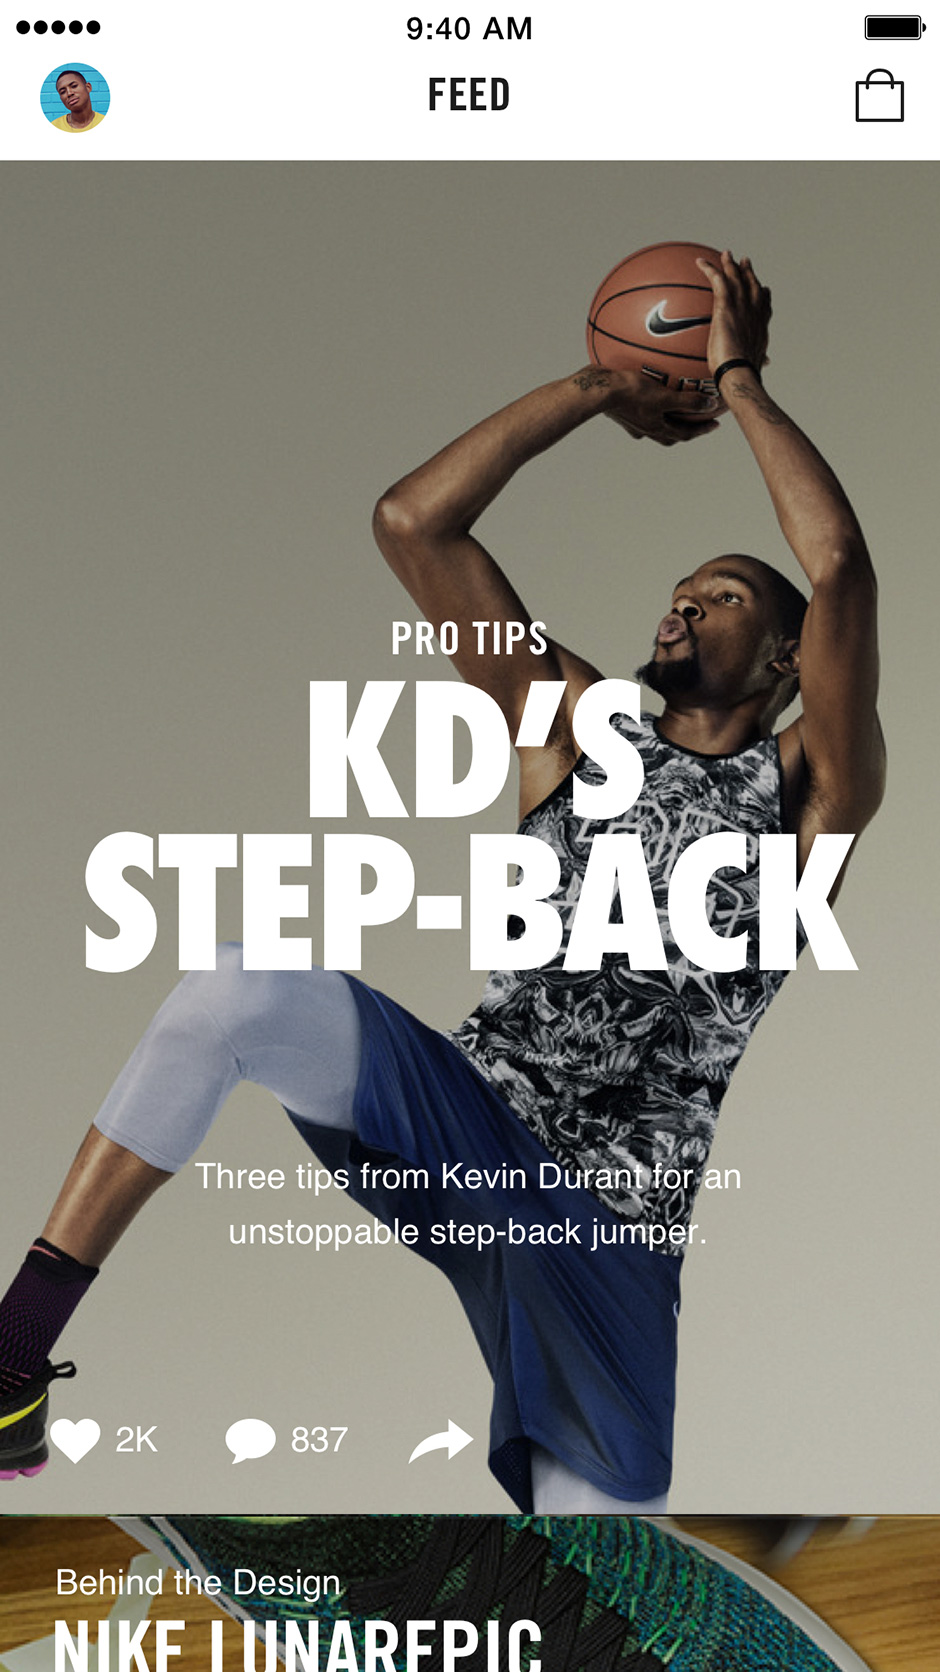 Nike New App August 2016 1